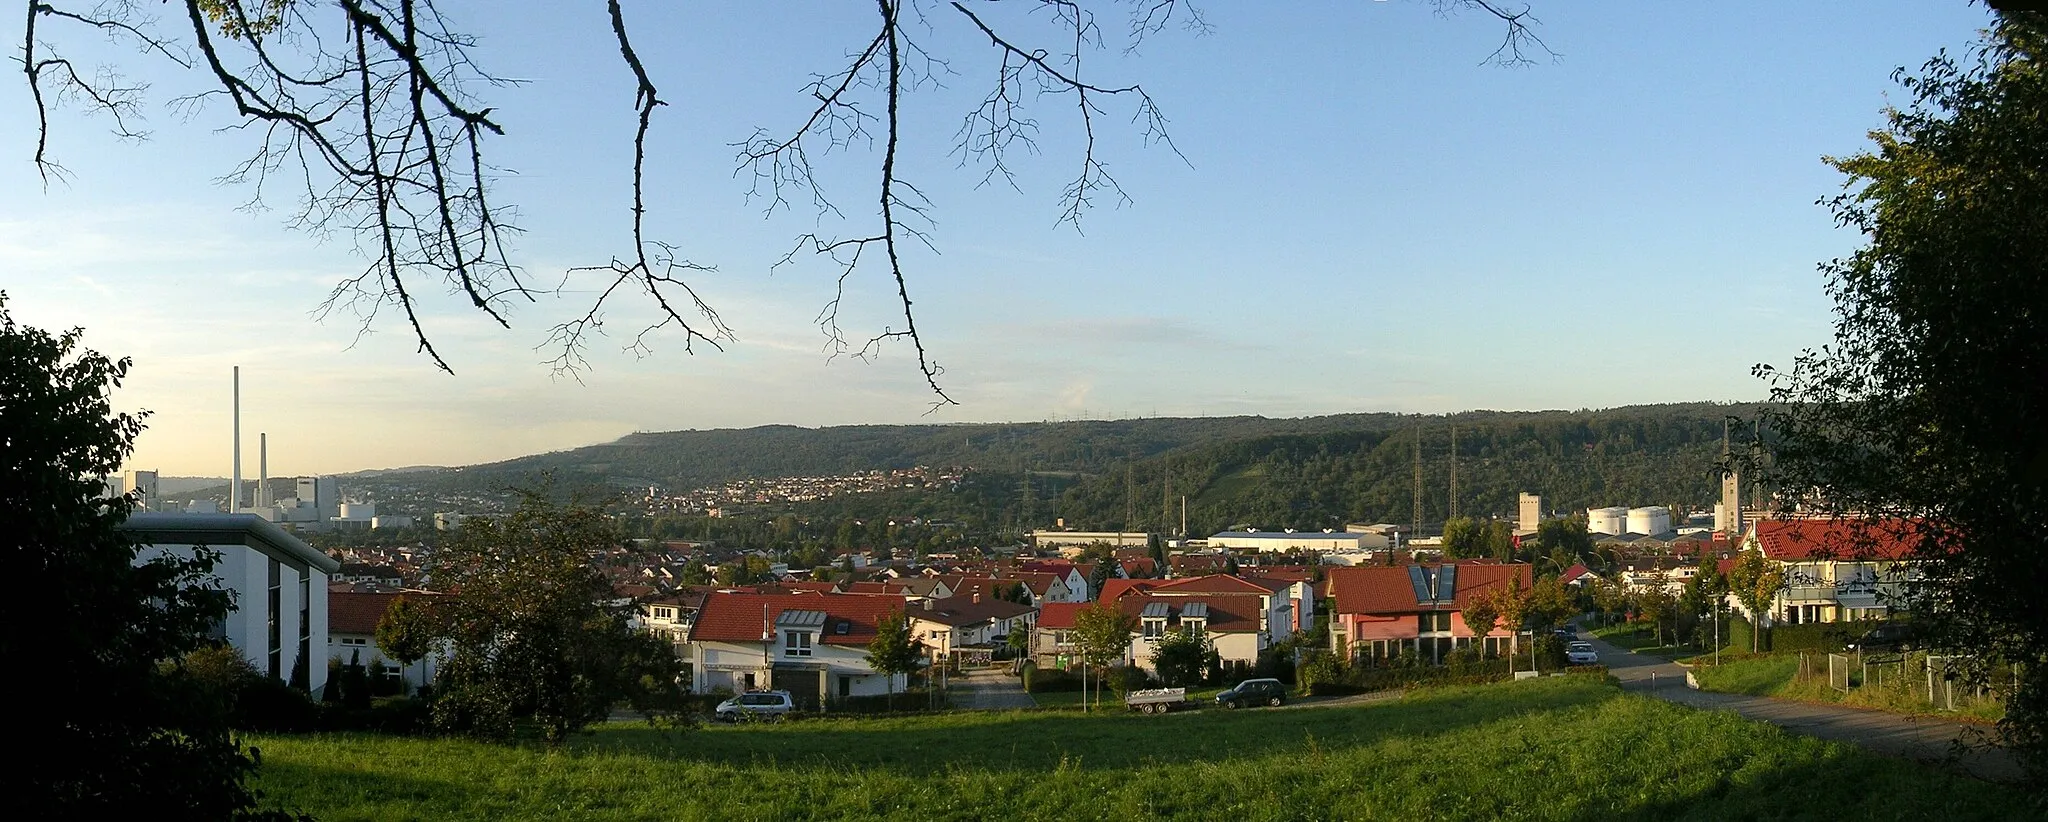 Image of Deizisau